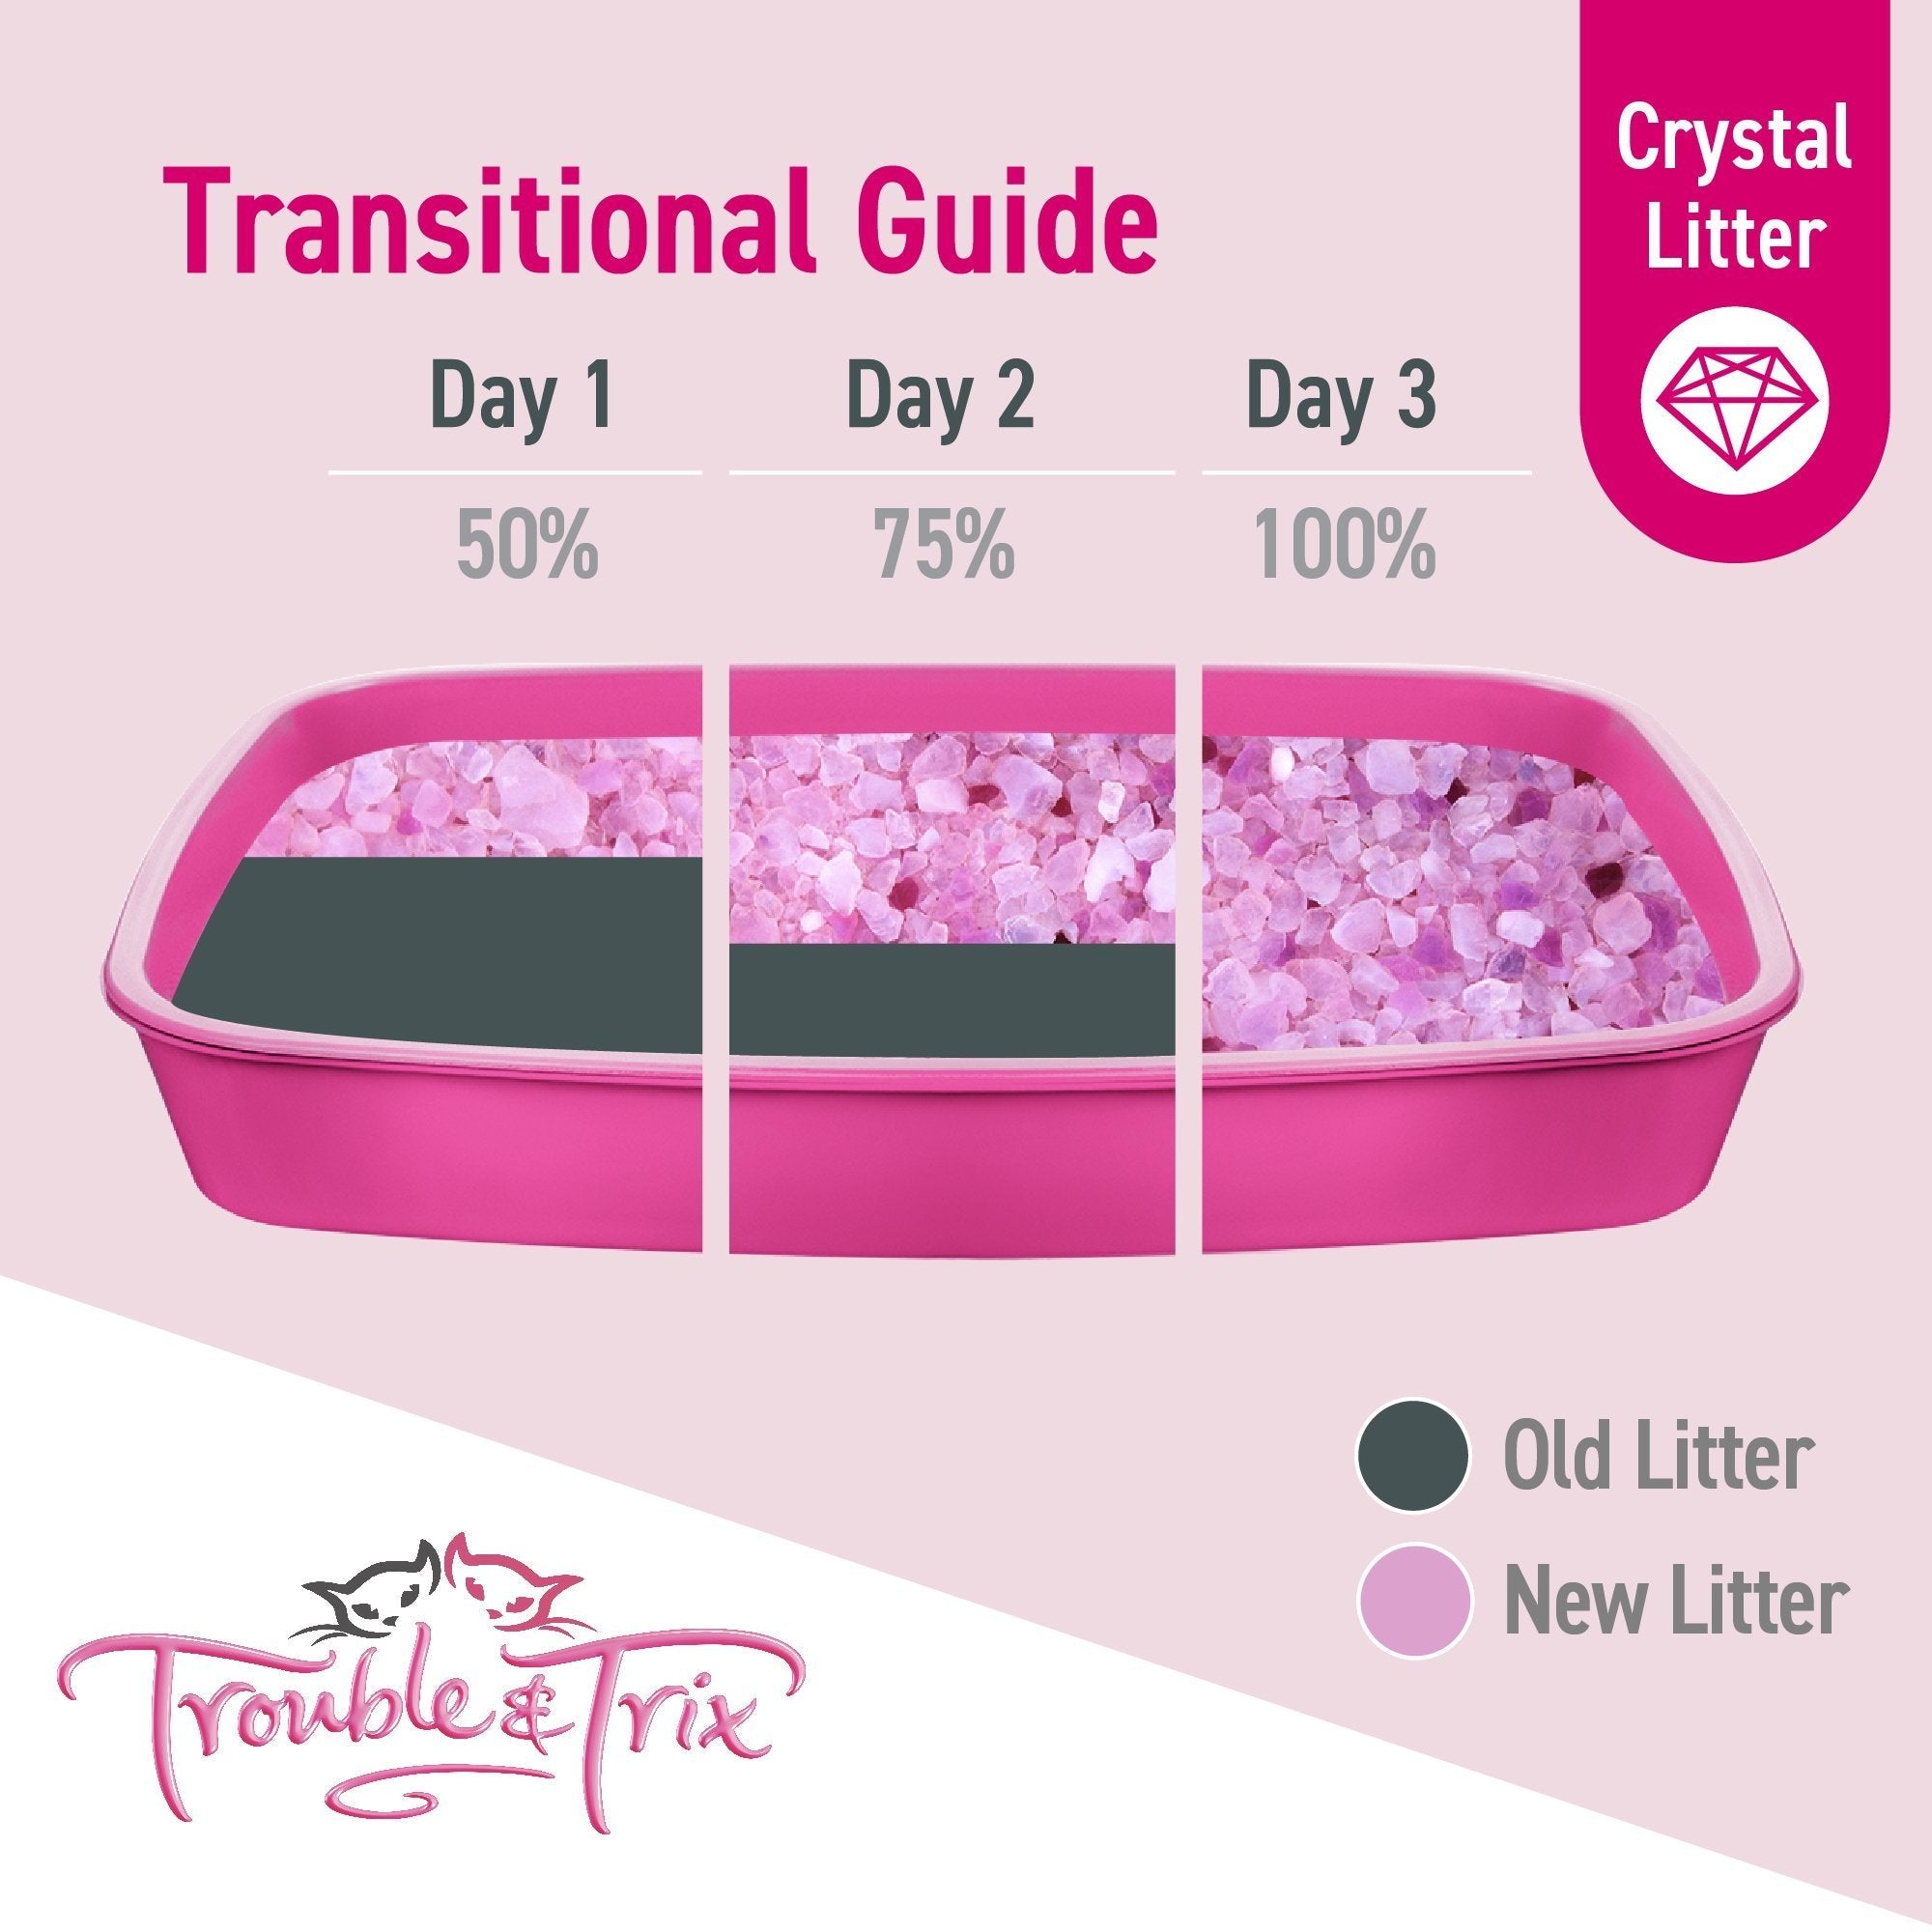 Trouble & Trix Antibacterial Crystal Litter 15L